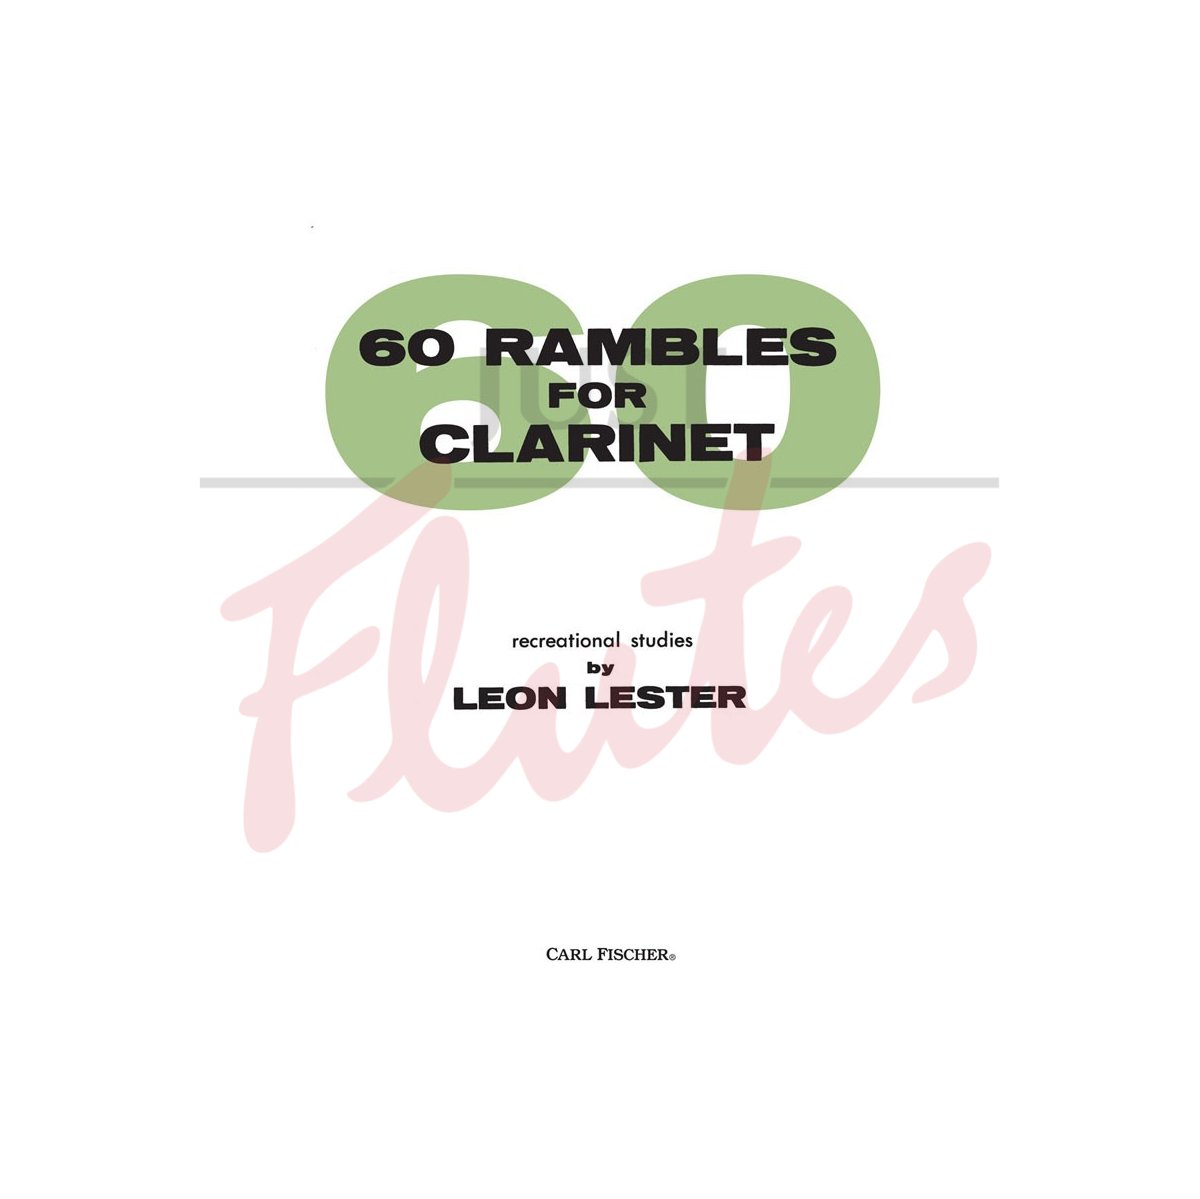 60 Rambles for Clarinet - Recreational Studies